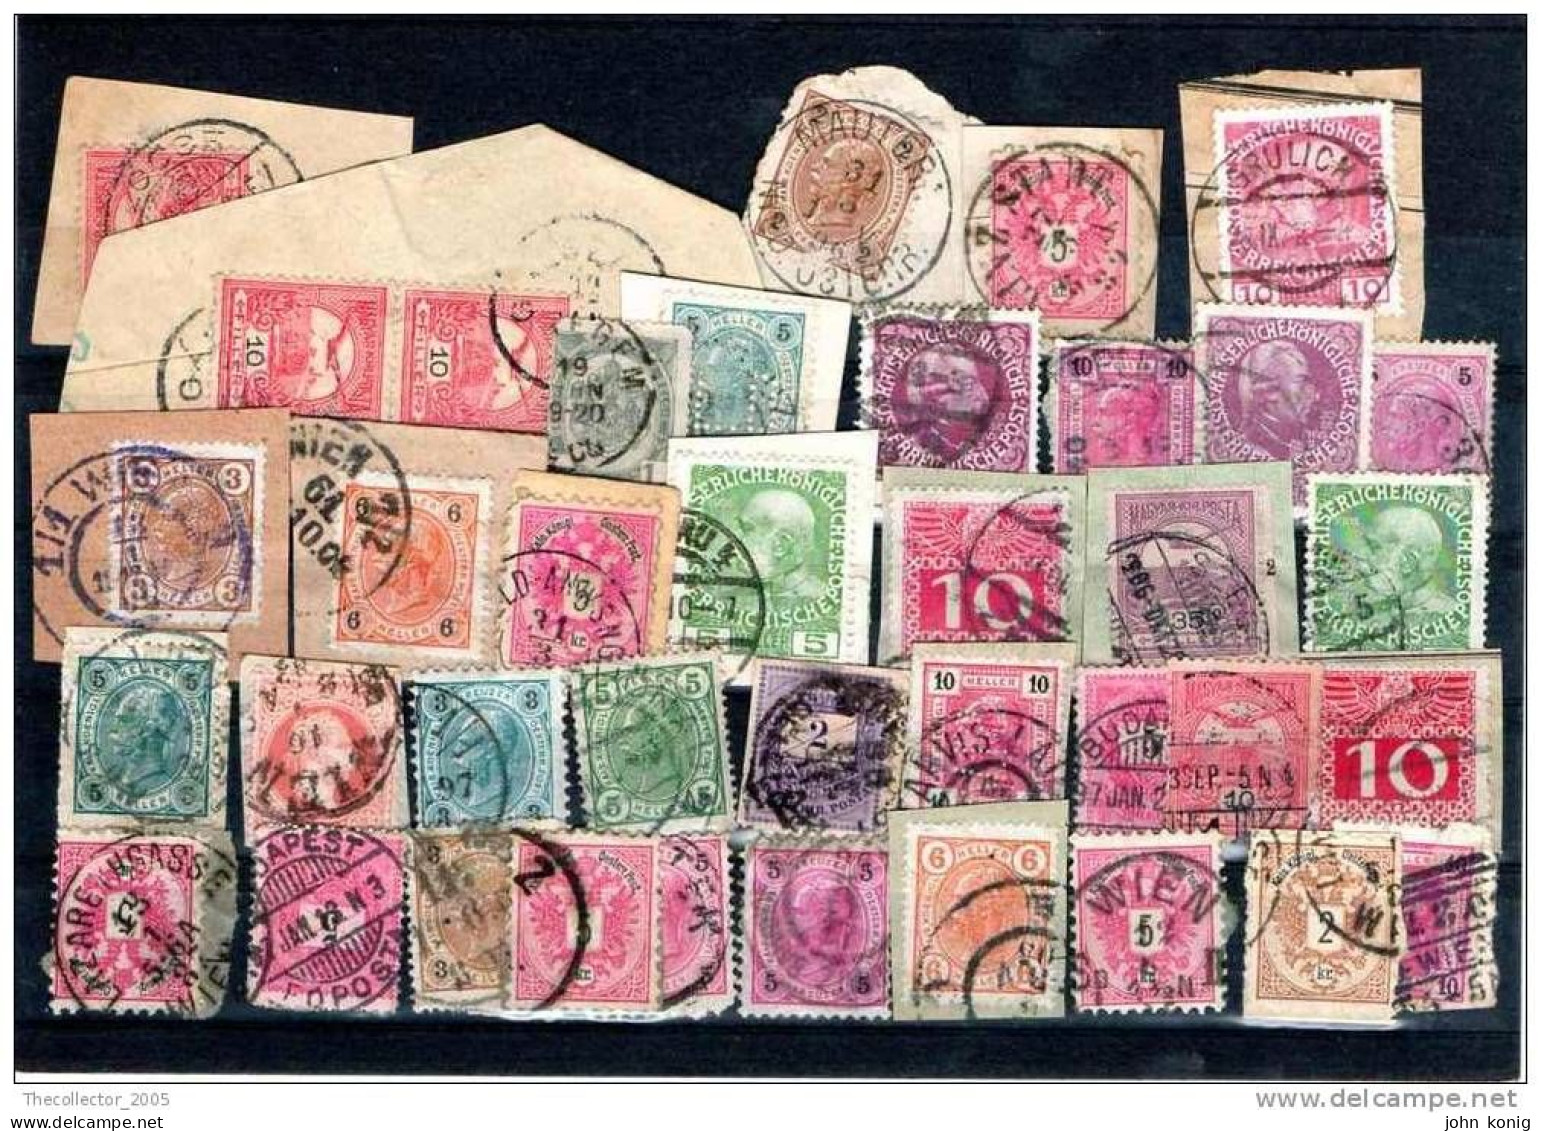 Ungheria Hungary Magyar Posta - Stamps Lot Used - Gestempelt - Francobolli Lotto Usati - Lotes & Colecciones